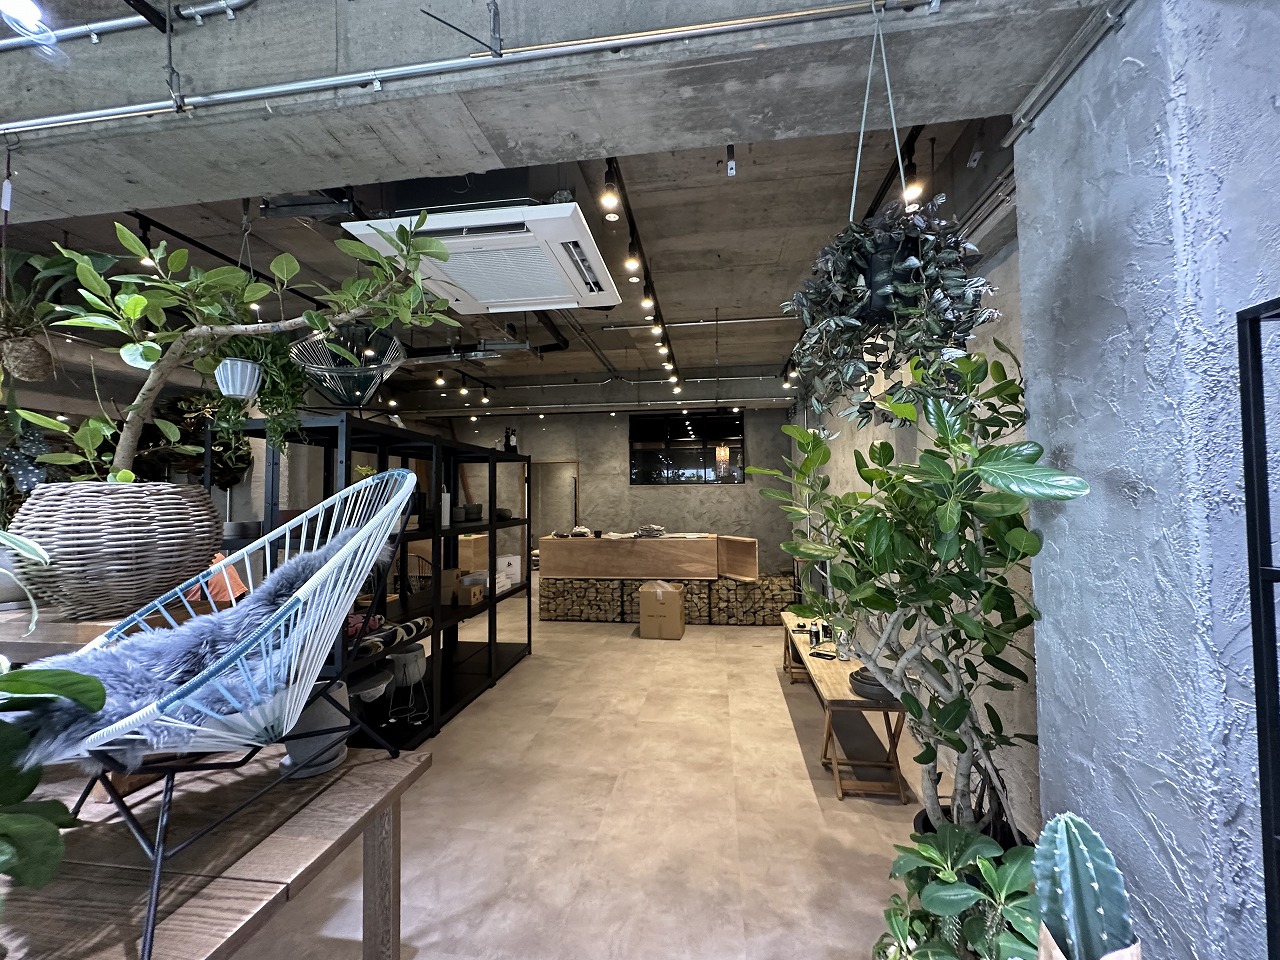 A-plants神戸店